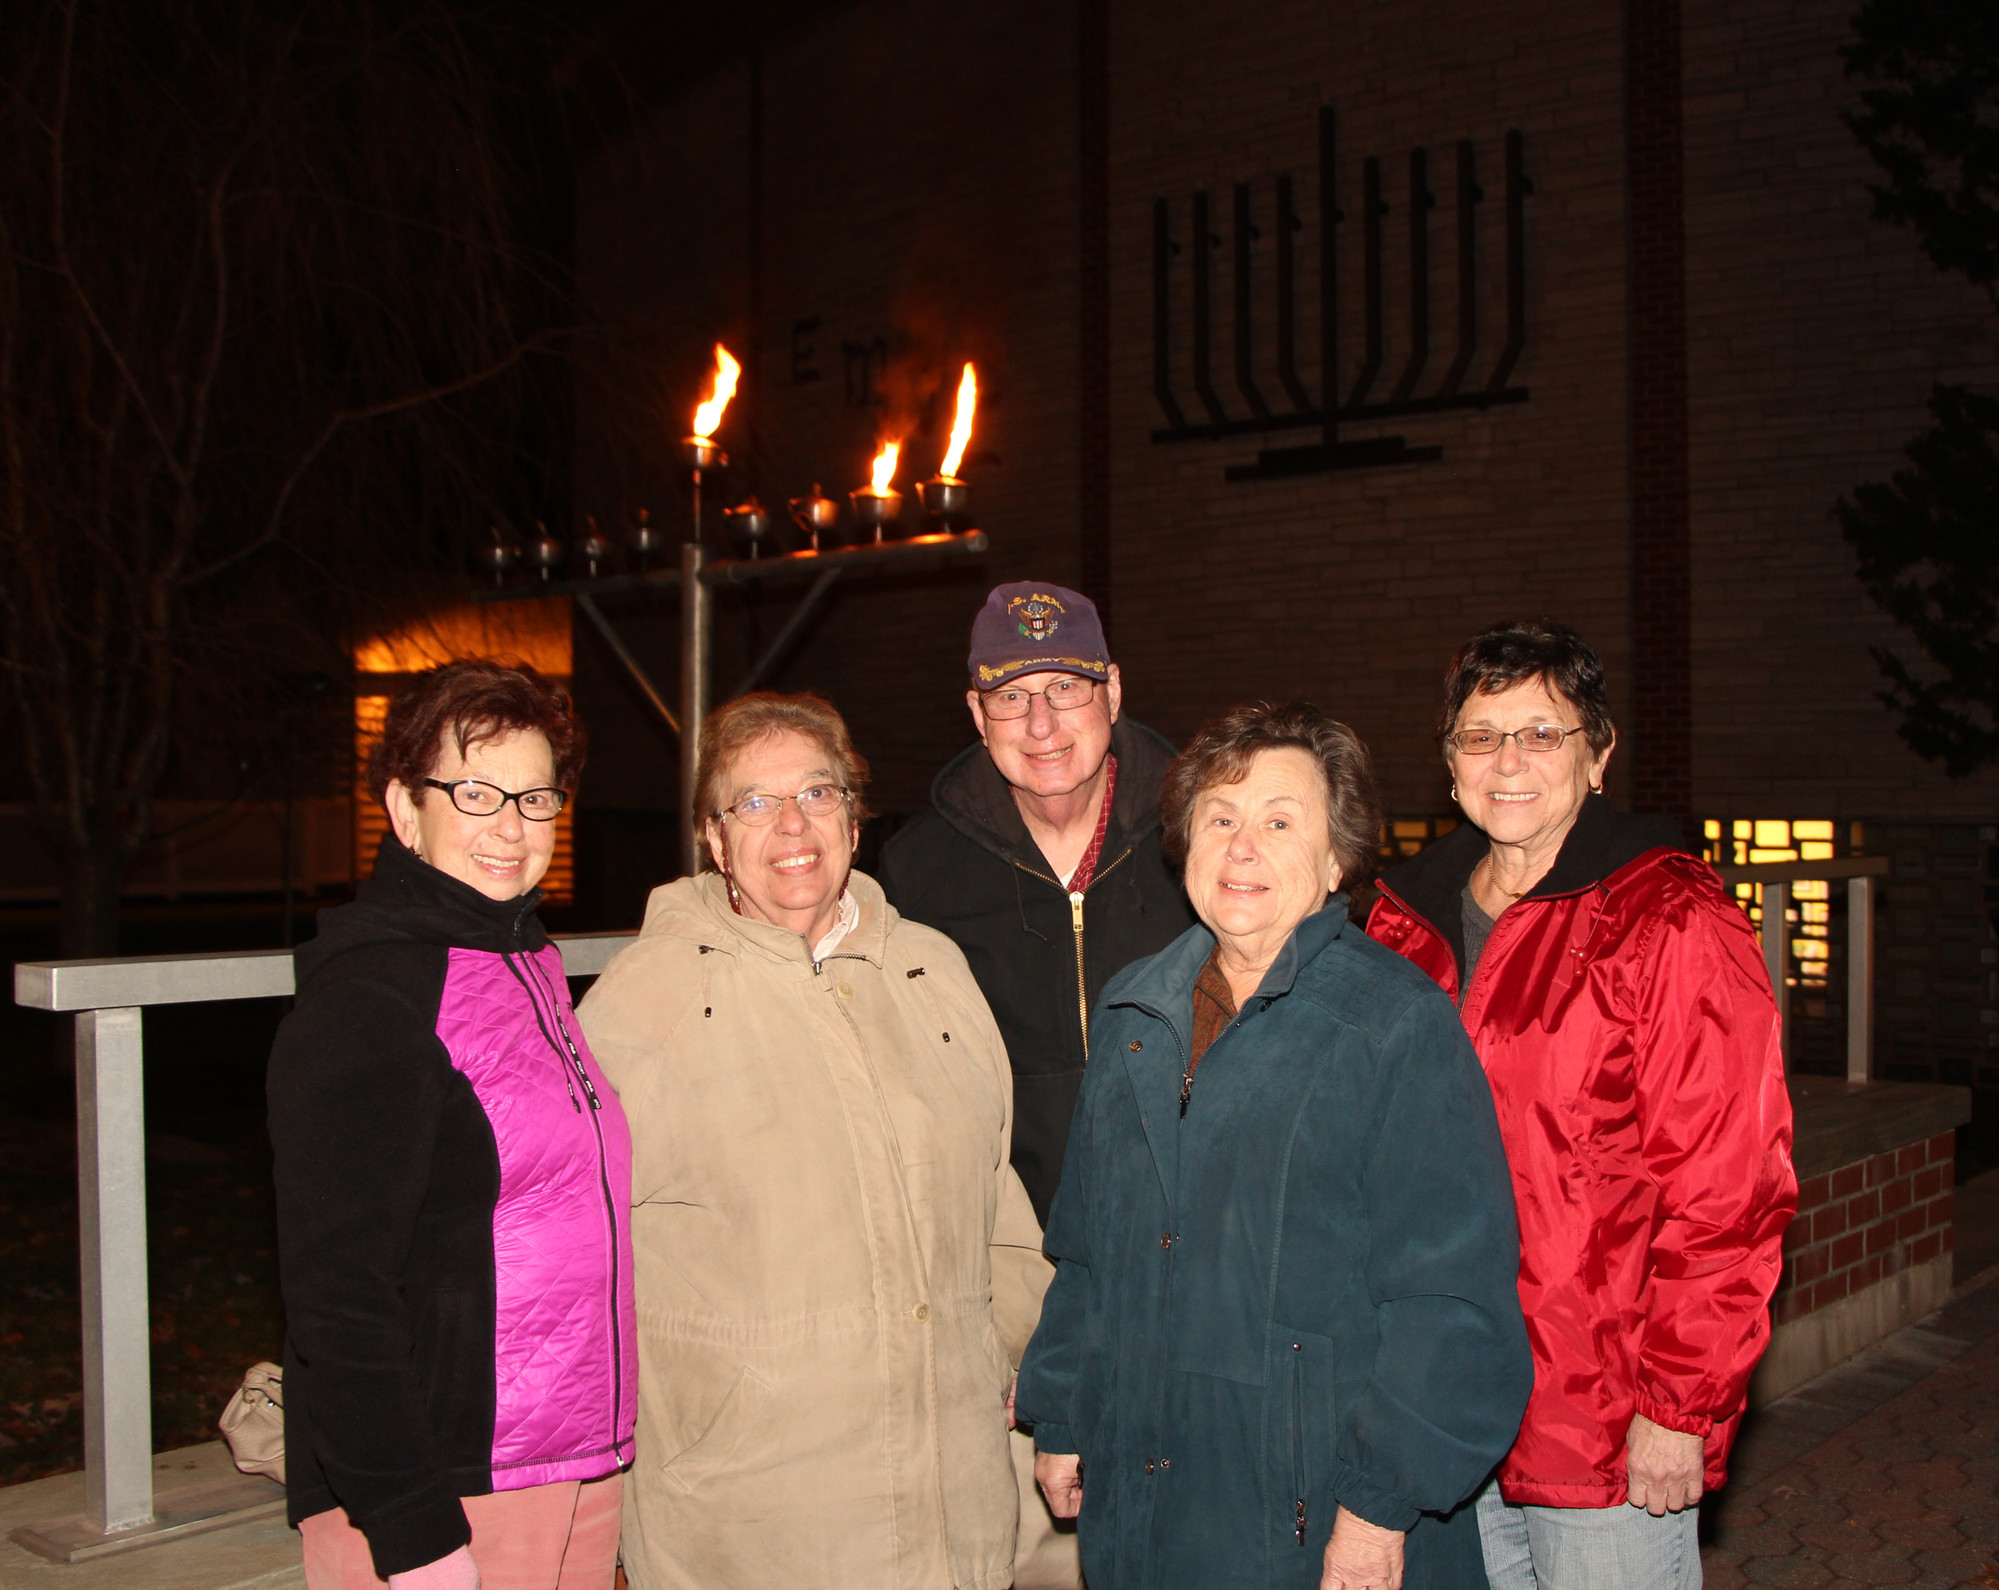 Friends like Terri Frankenberg, Zepora Katz, Bill Katz, Irene Levine and Barbara Schreibman gathered to celebrate the second night of Hanukkah.